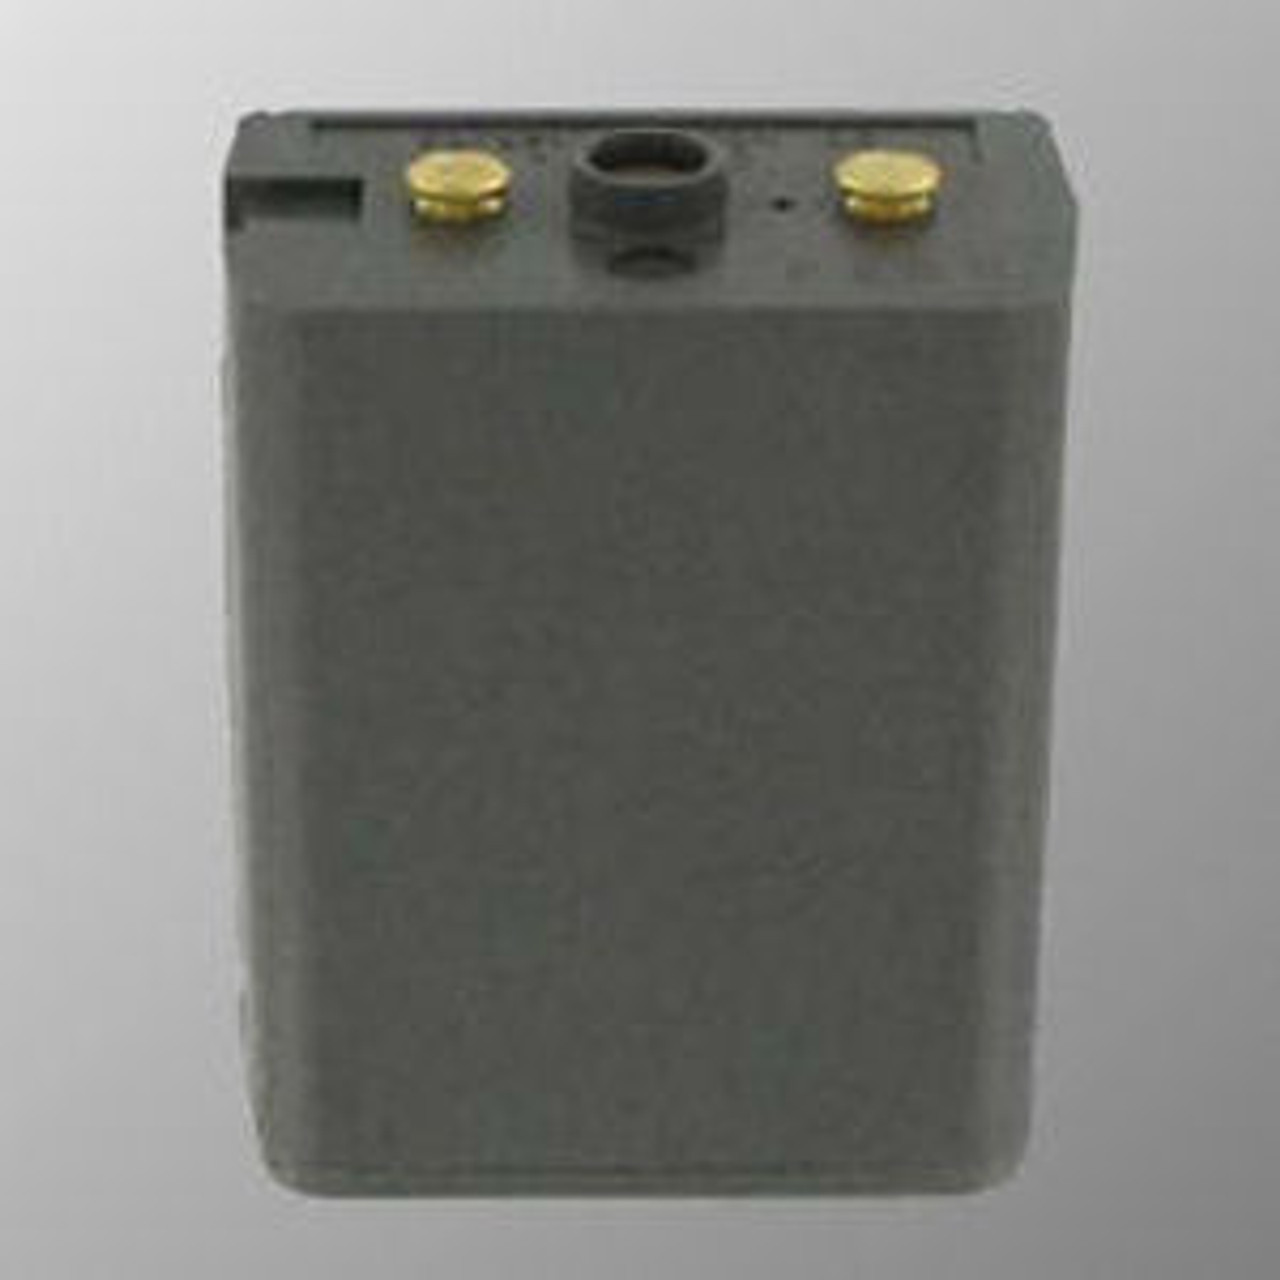 Bendix King LAA0134 Battery Upgrade - 2500mAh Ni-MH, Gray Case